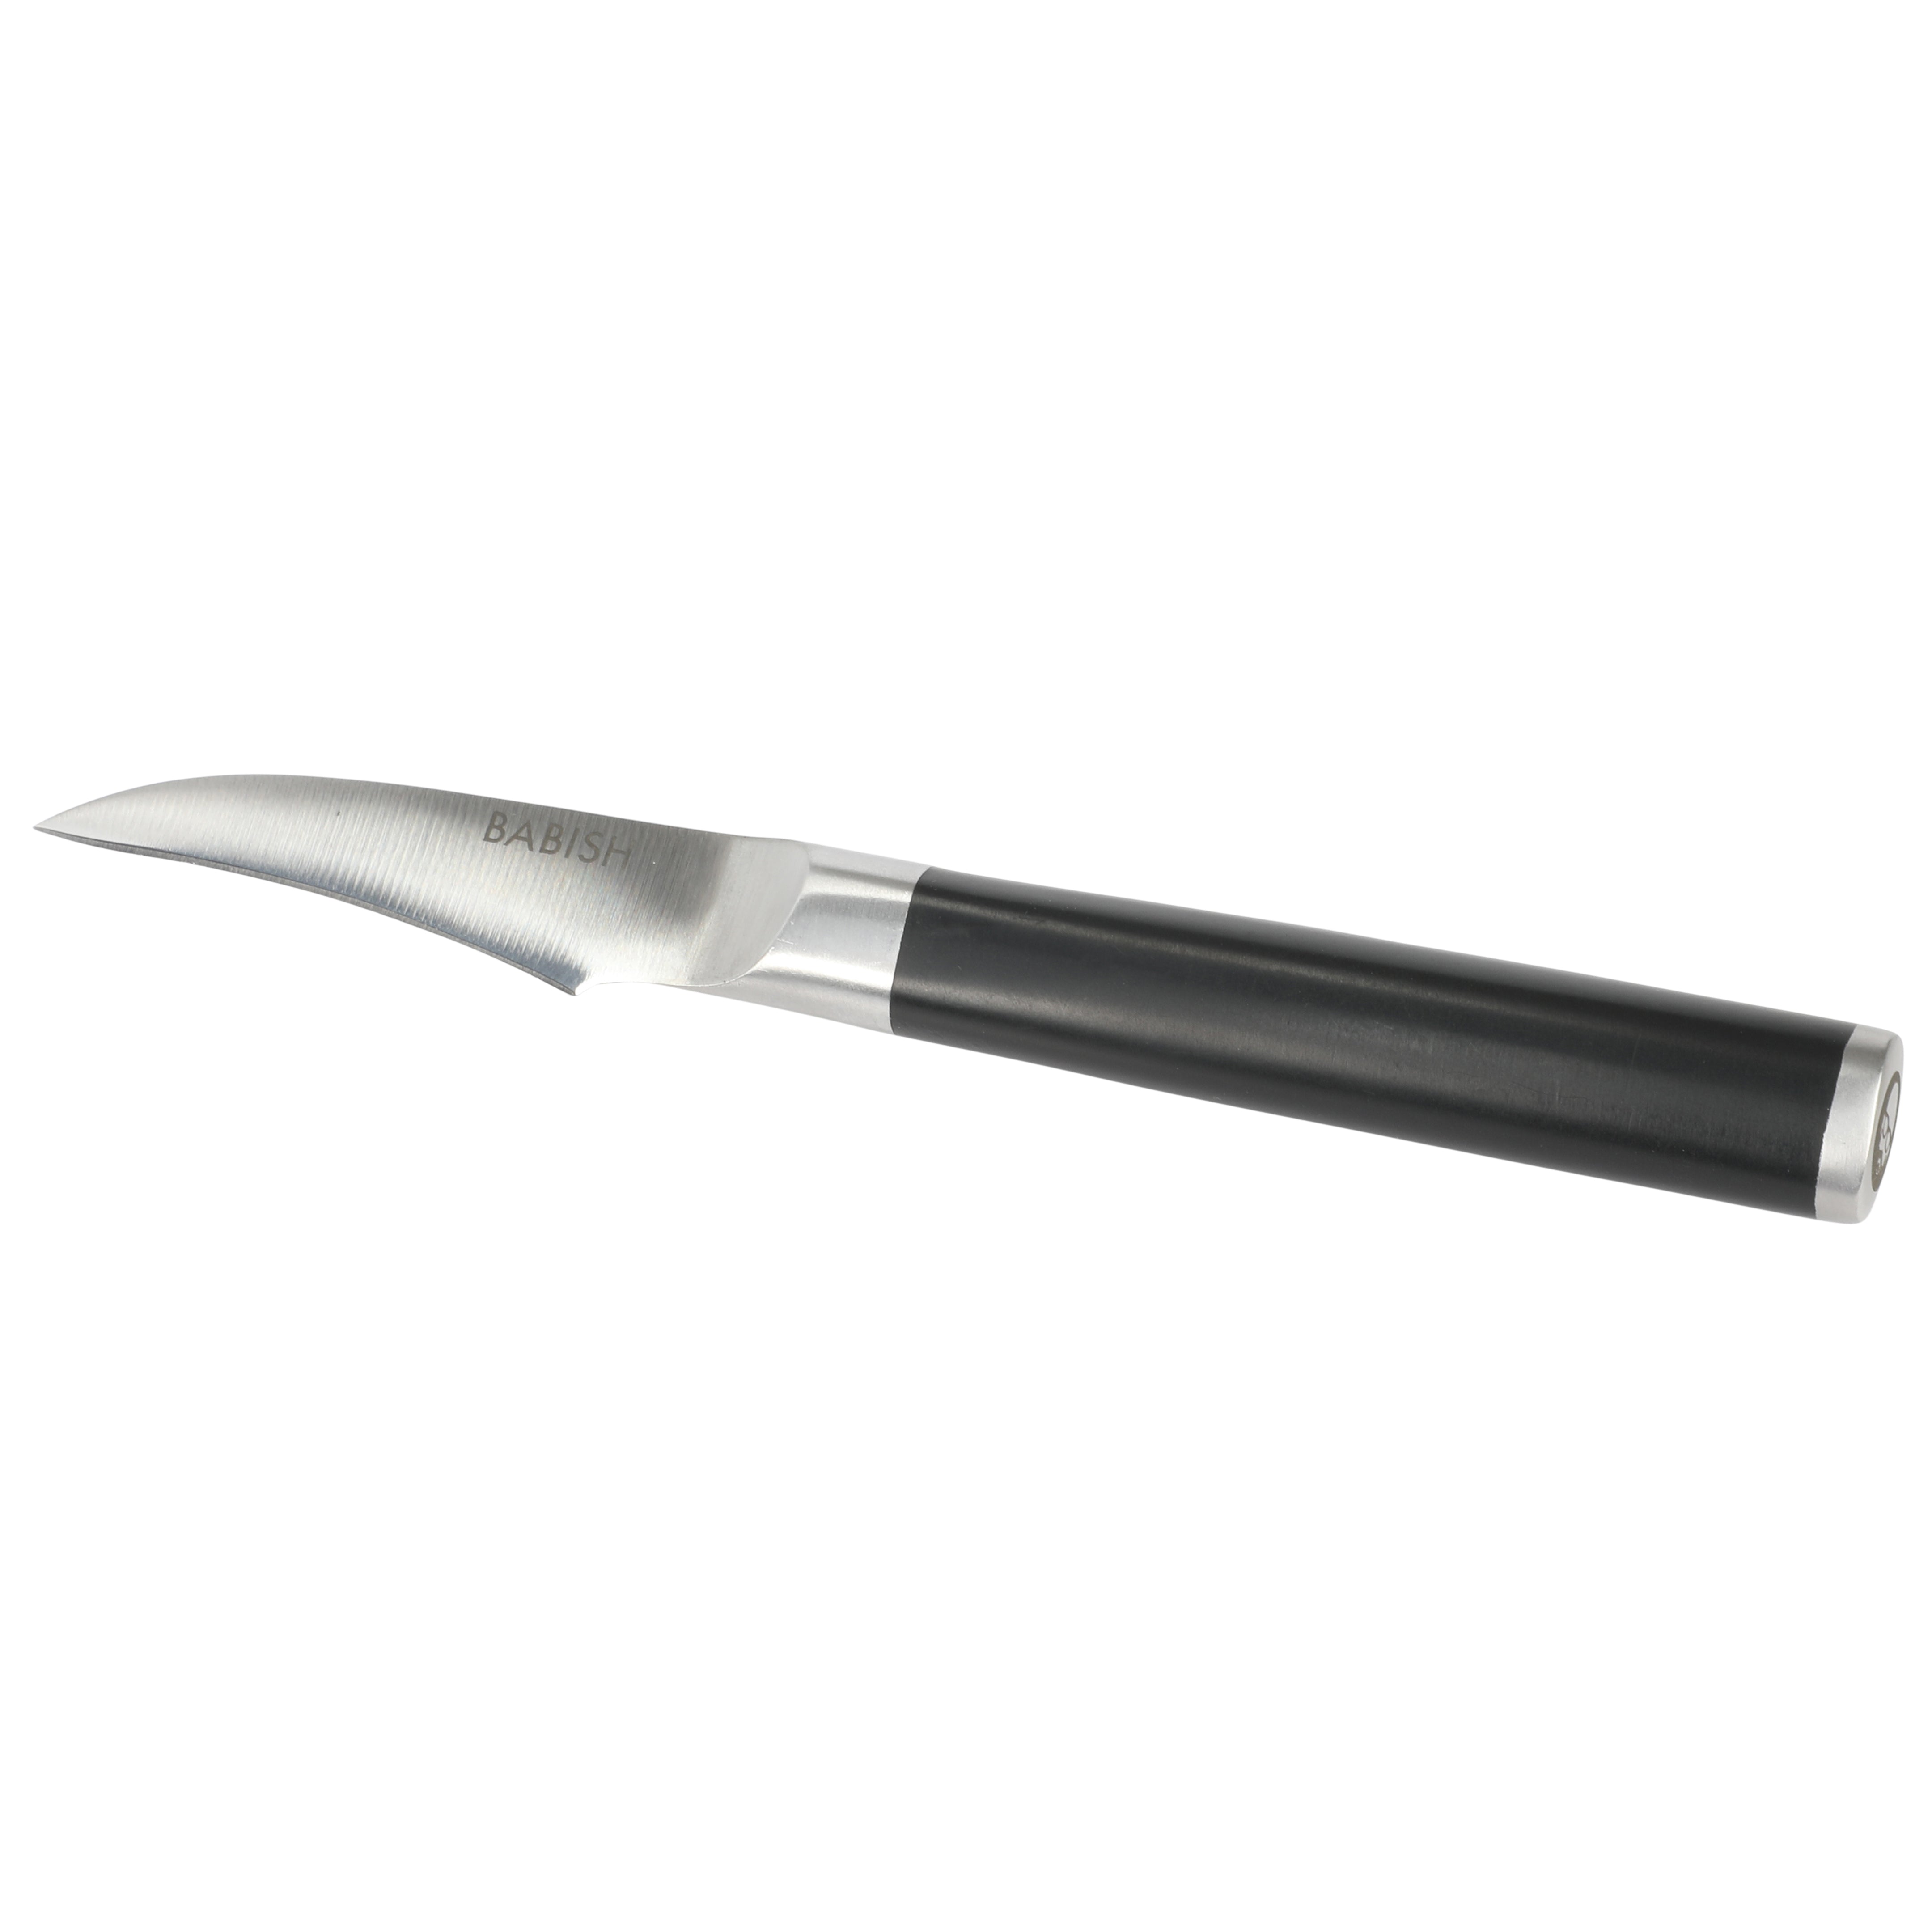 Babish High-Carbon 1.4116 German Steel 2.5 Bird's Beak Knife